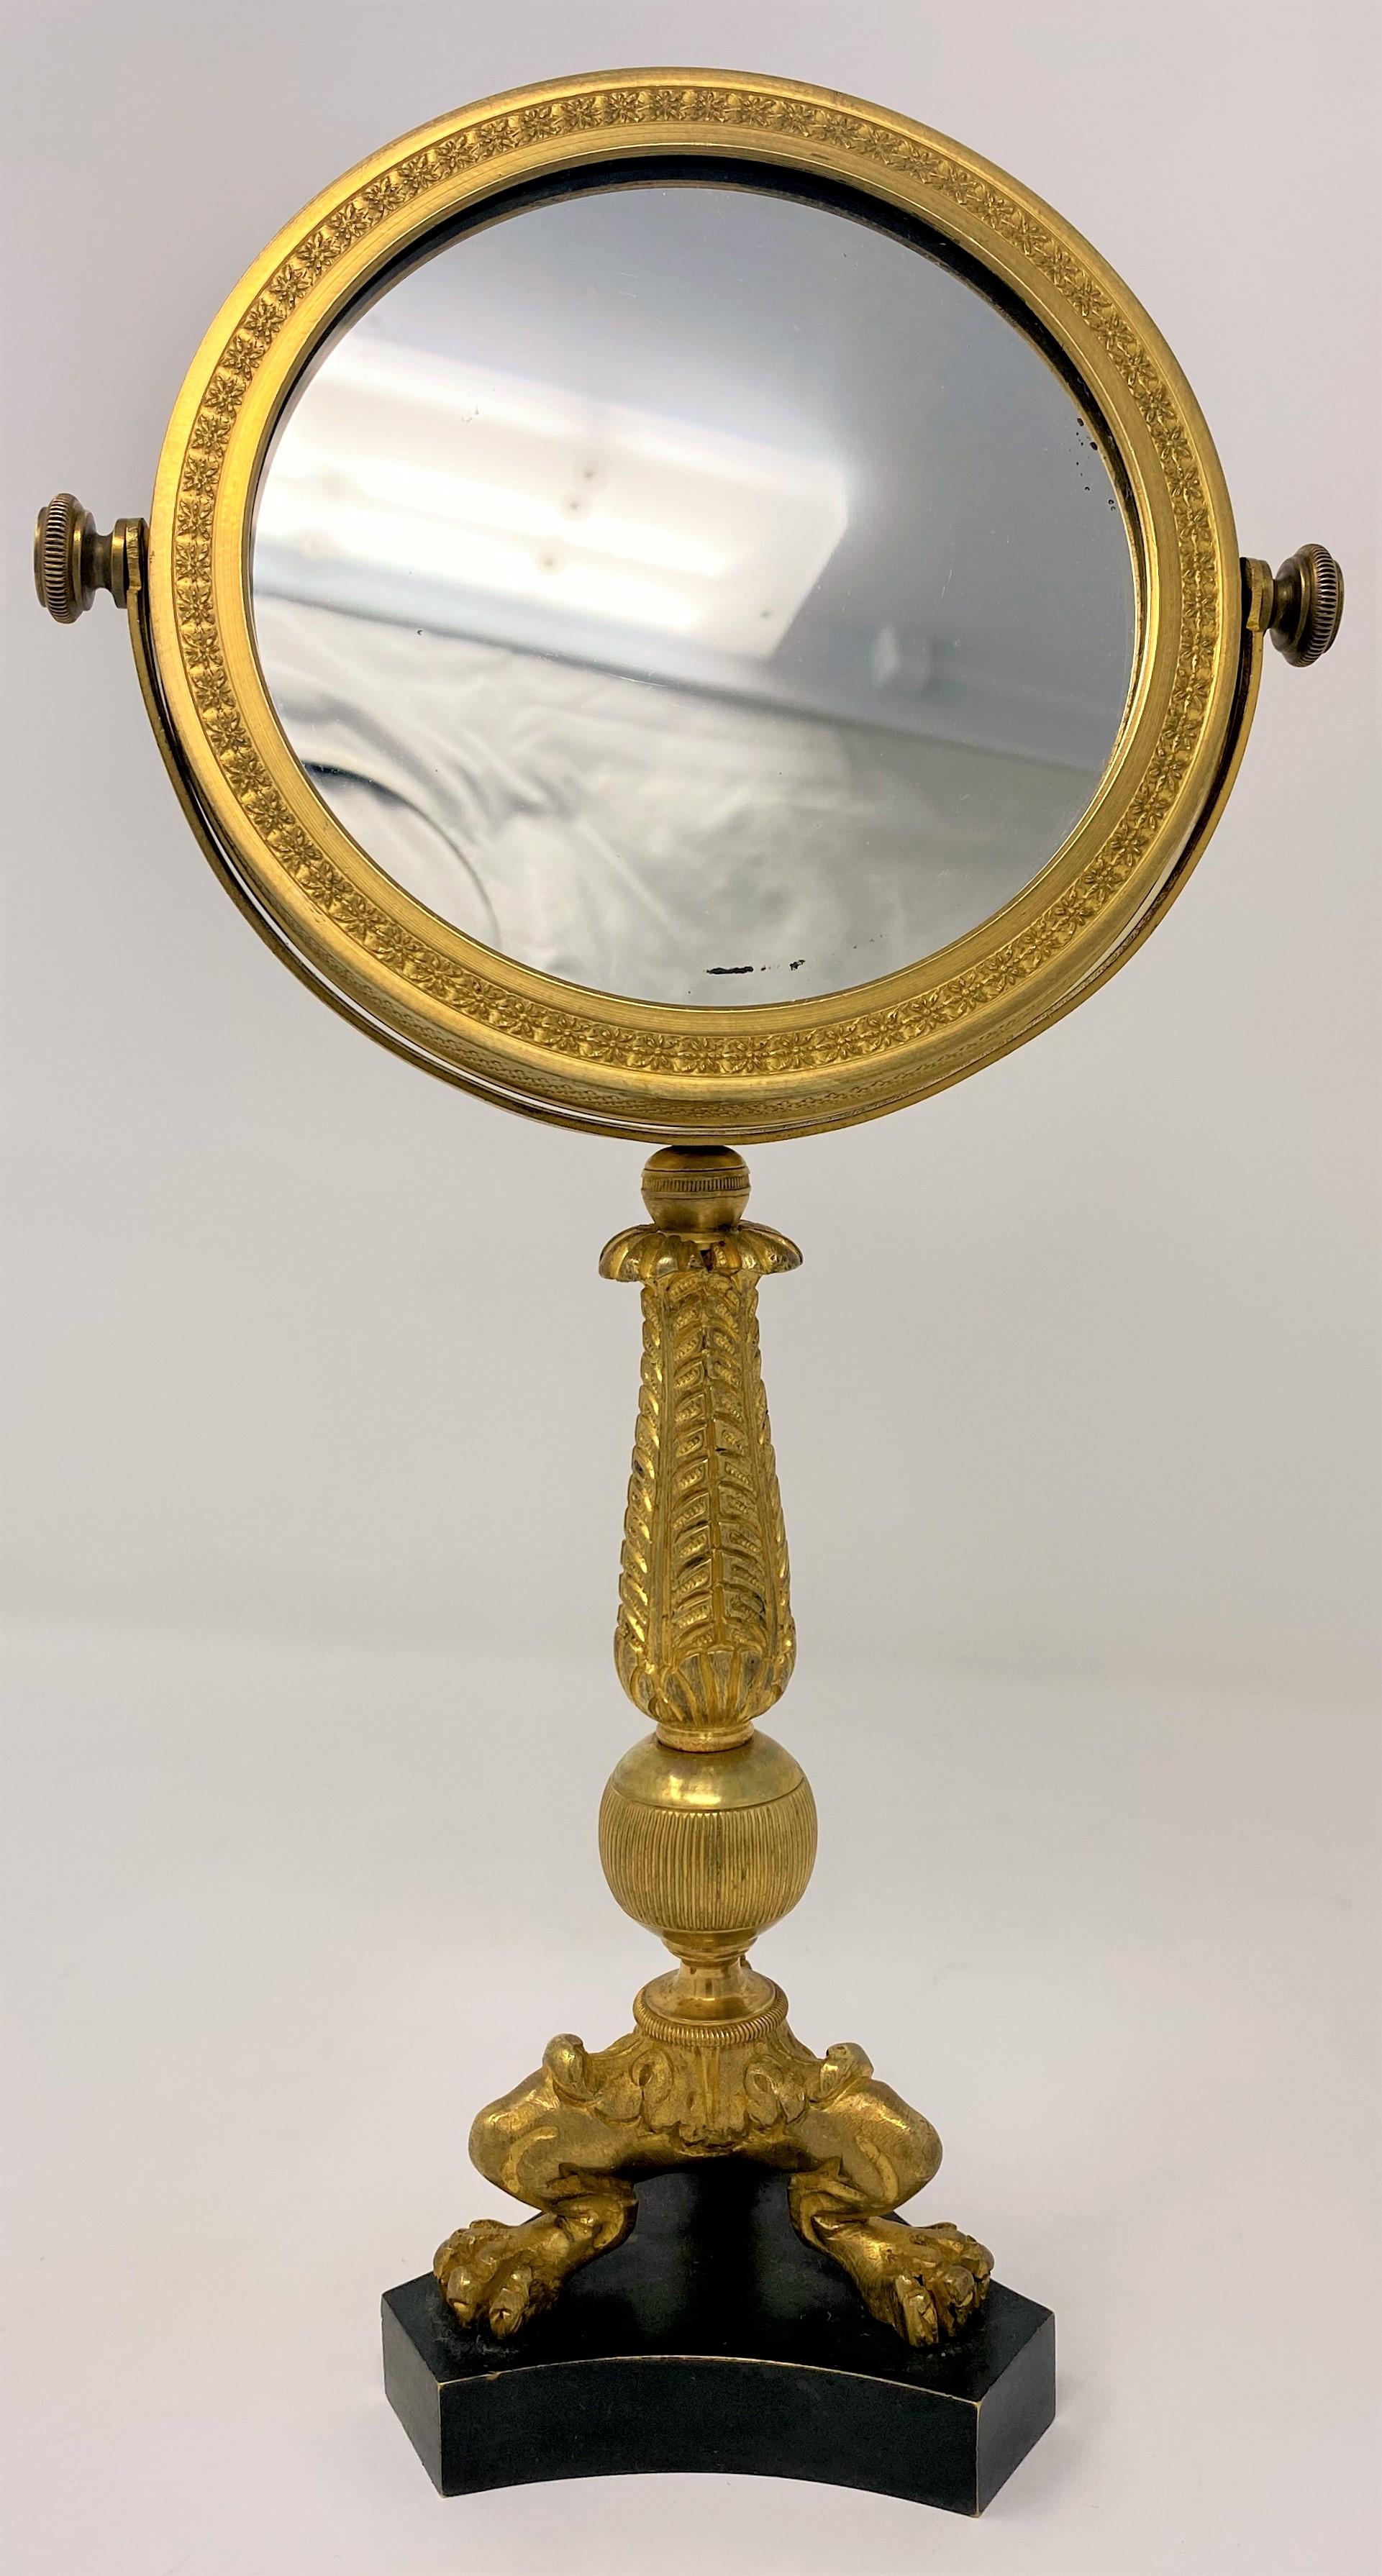 Antique French Louis Philippe style bronze doré coiffeuse vanity mirror, circa 1880.
Measures: 12 1/2